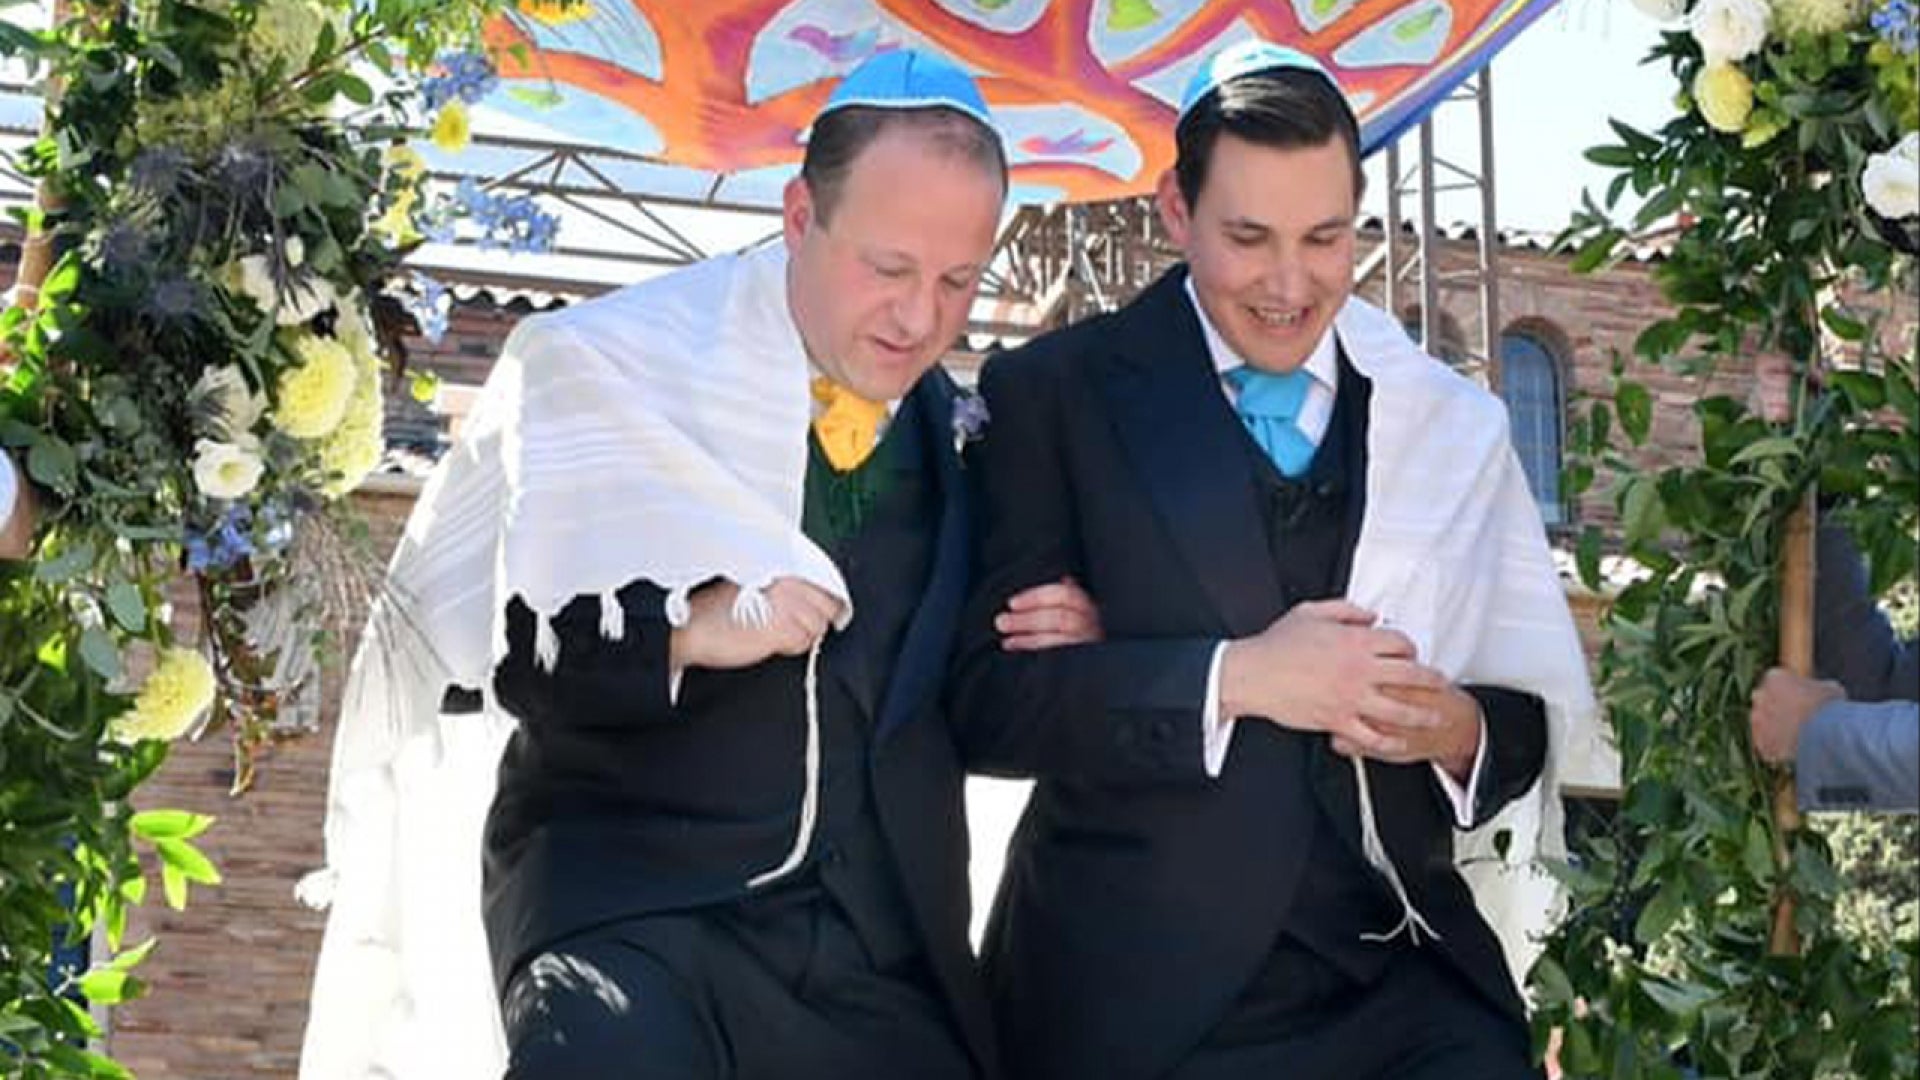 Colorado Gov Weds Partner In First Same Sex Marriage For Sitting Gov Inside Edition